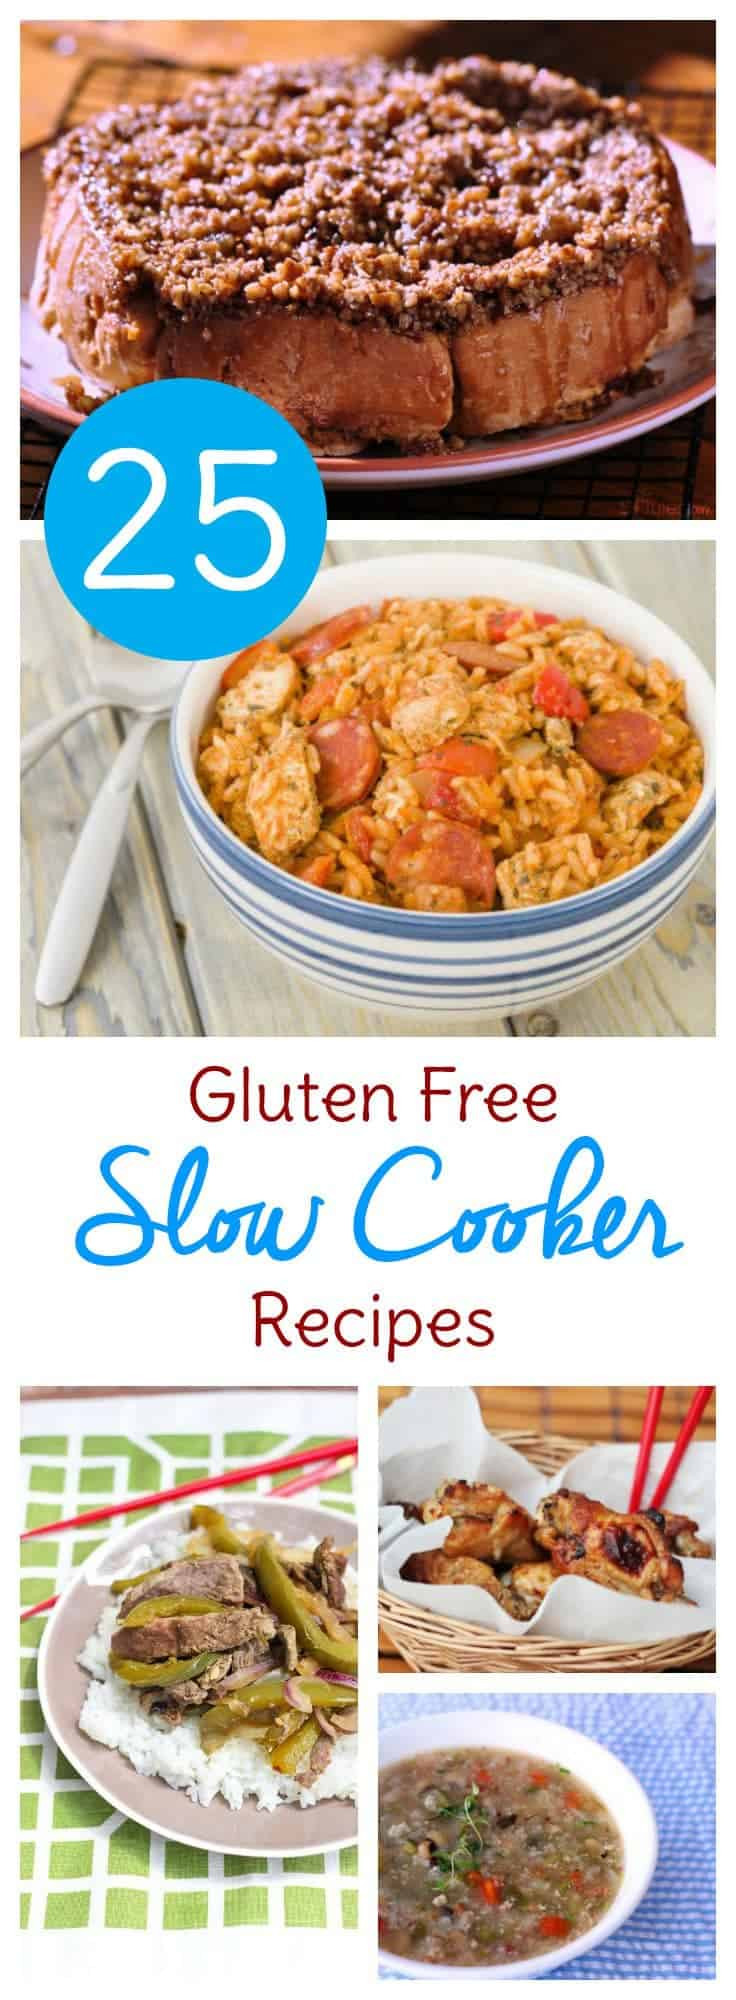 Healthy Gluten Free Crock Pot Recipes
 Gluten free crock pot recipes easy Food easy recipes